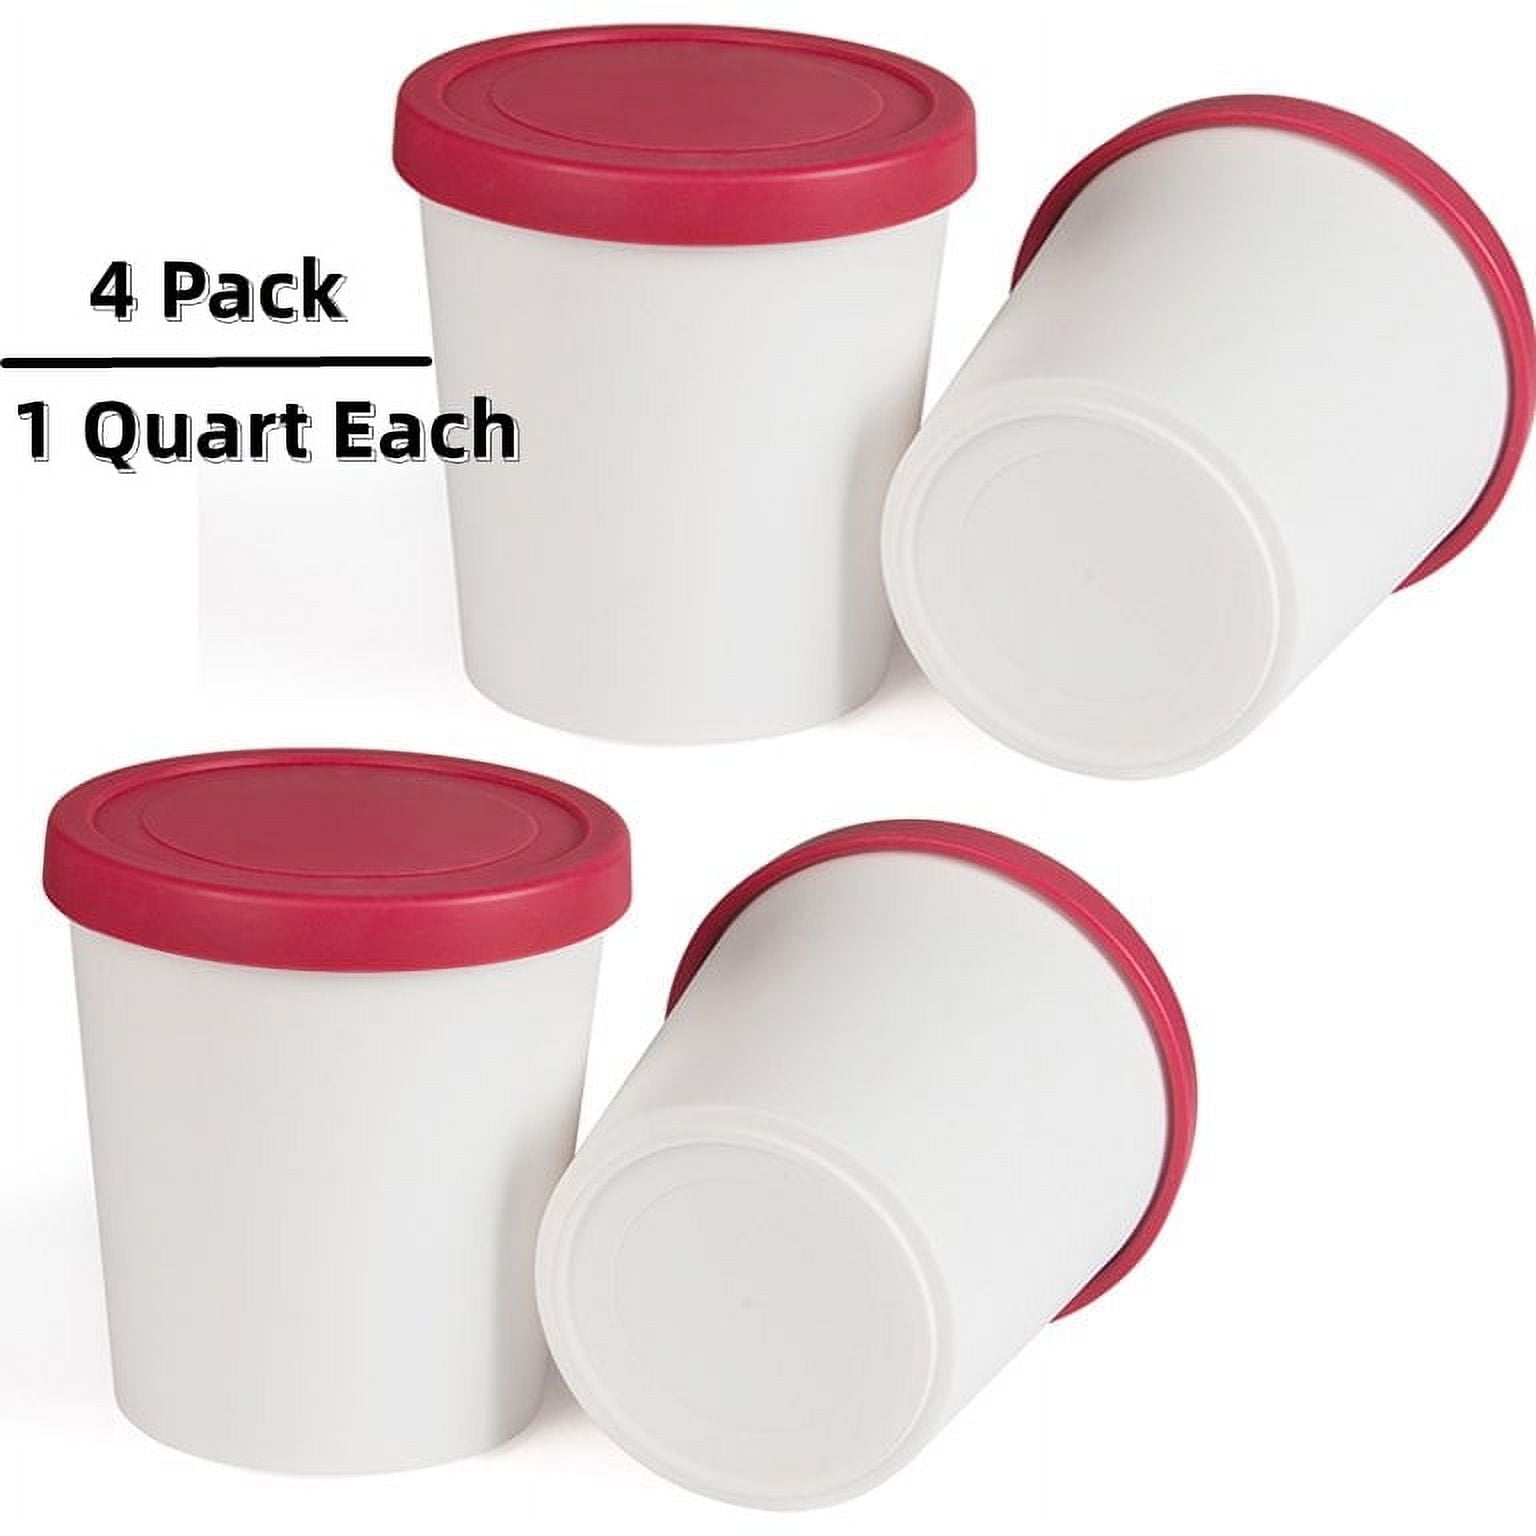 2Pack - 1 Quart Ice Cream Containers Yogurt Sorbet Freezer Storage